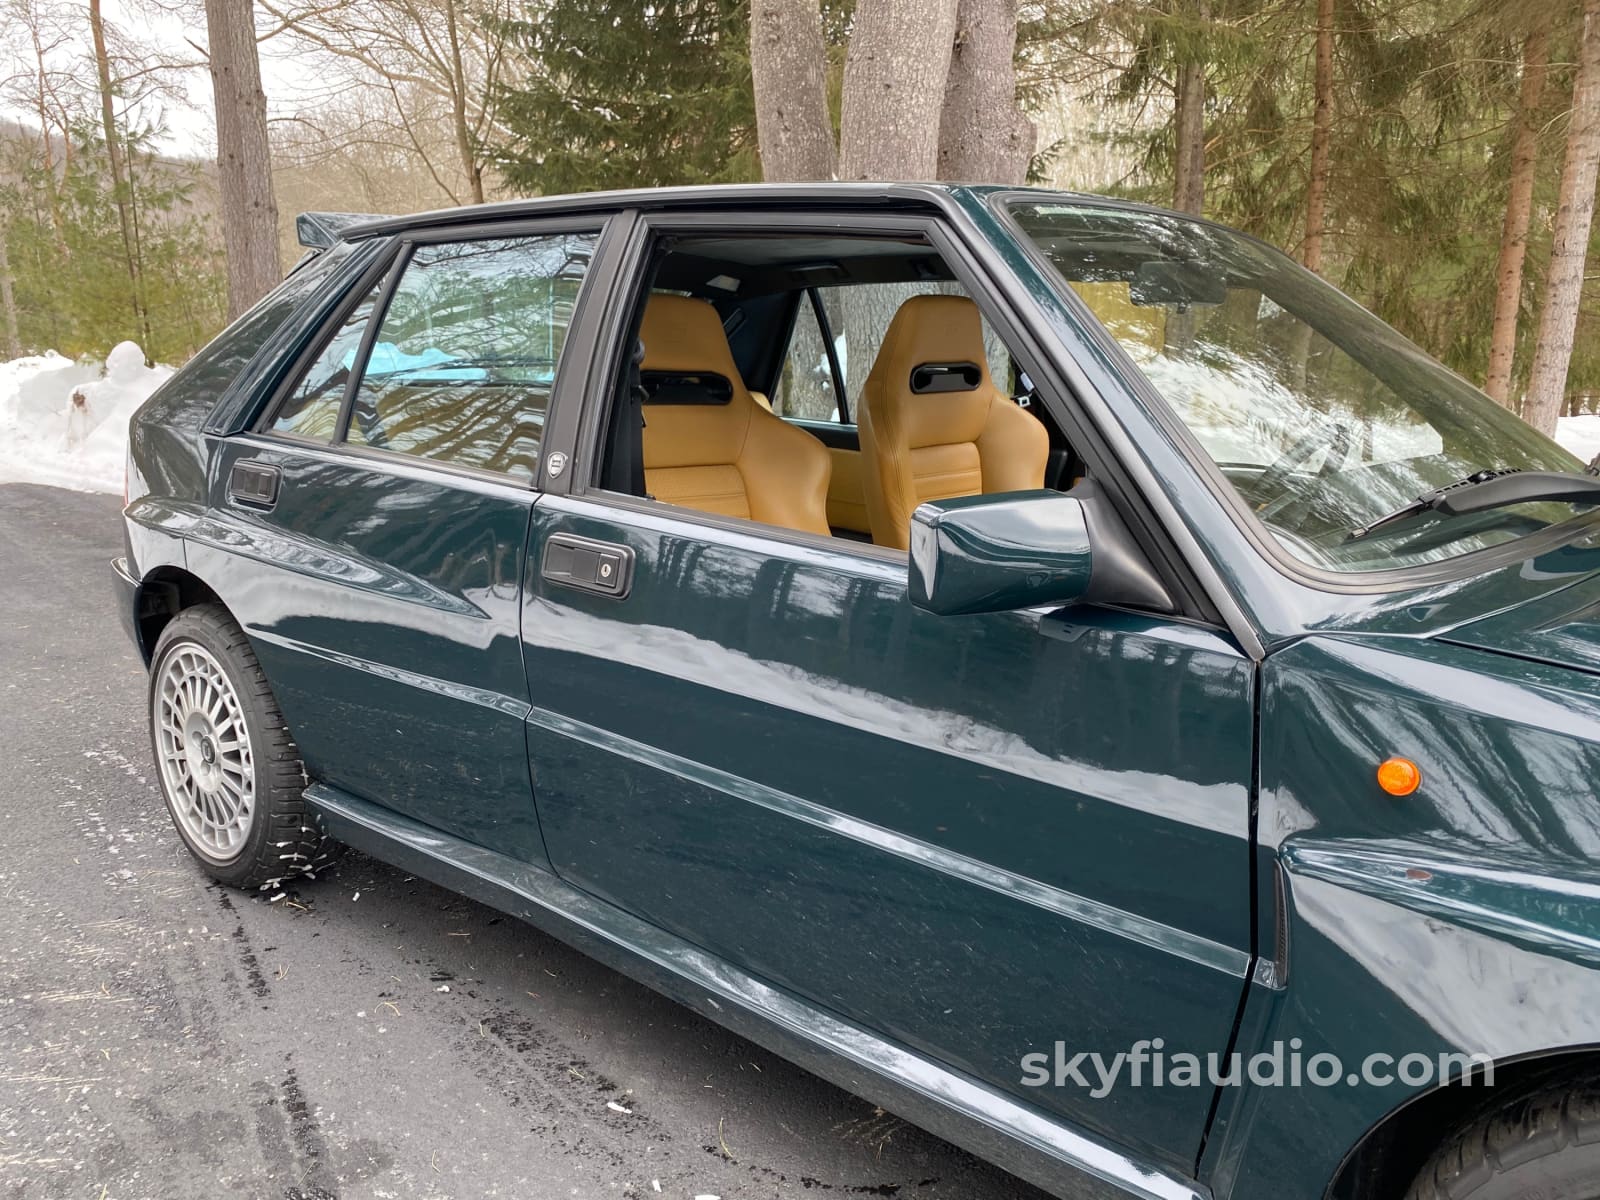 1992 Lancia Delta Hf Integrale Evolution - Special Edition 4Wd 2.0L Turbo Vehicle